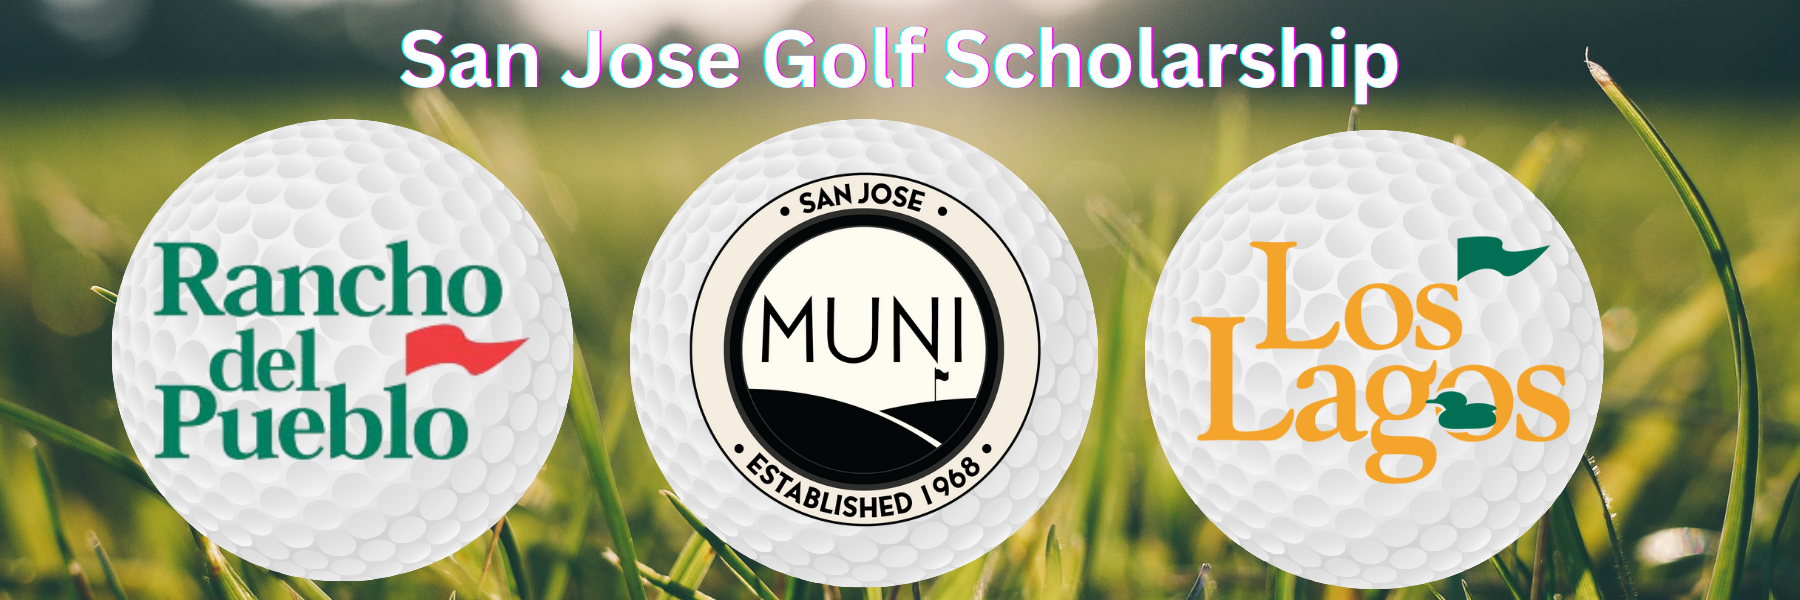 San Jose Golf Scholarship Header 1